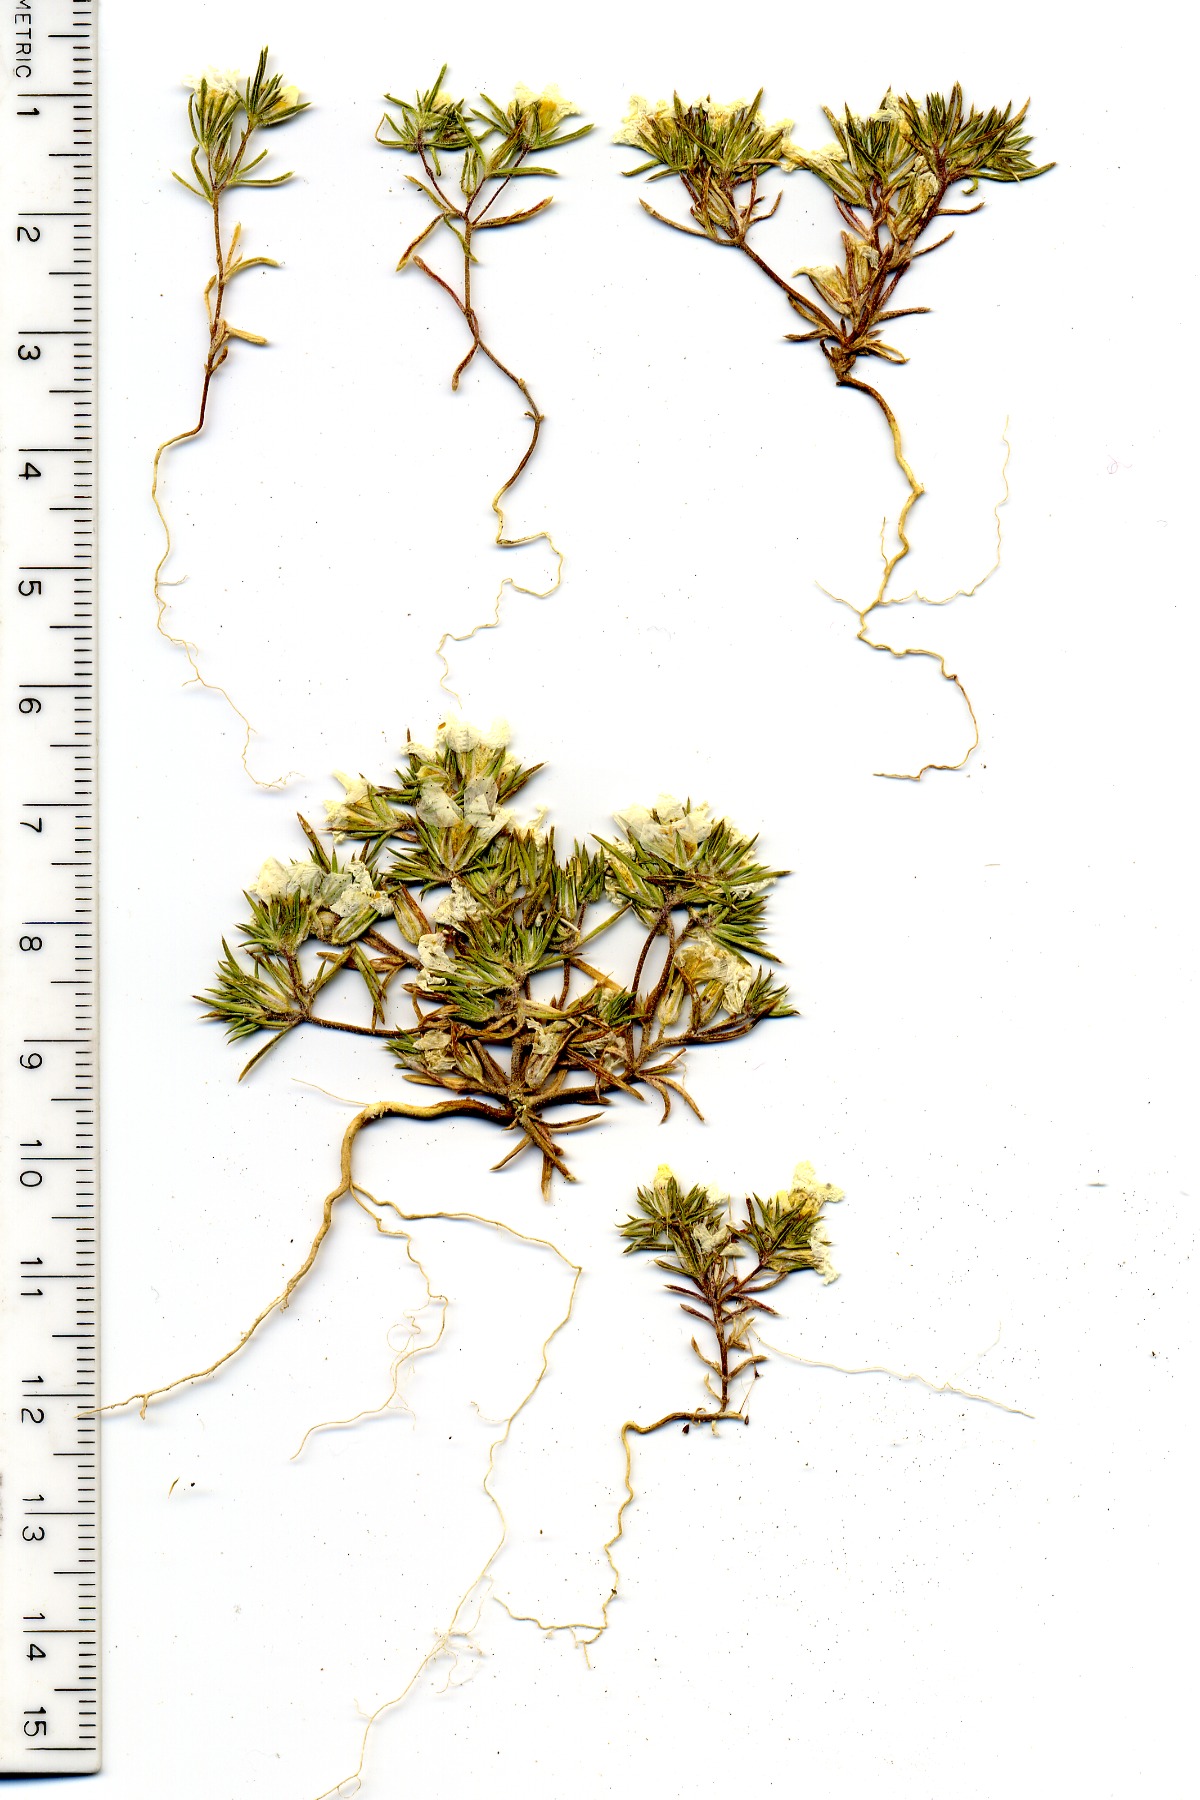 Linanthus demissus, Polemoniaceae, Mesquite Mountains, San Bernardino County, California